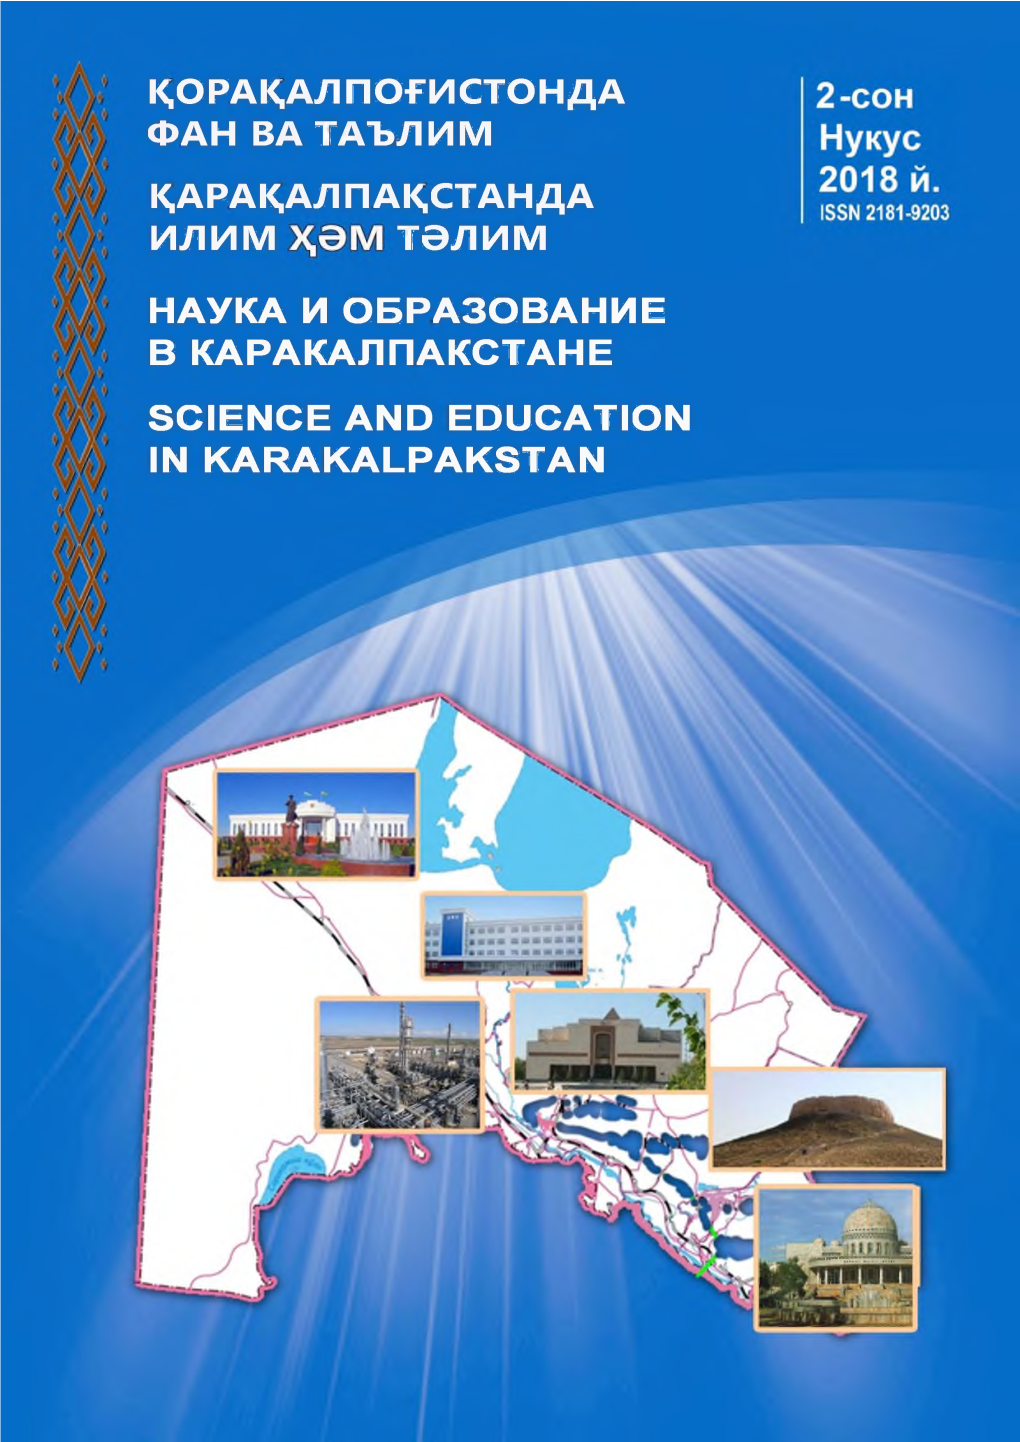 HAYKA M 0BPA30BAHME B Kapakajinakctahe SCIENCE and EDUCATION in KARAKALPAKSTAN Science and Education in Karakalpakstan ISSN 2181-9203